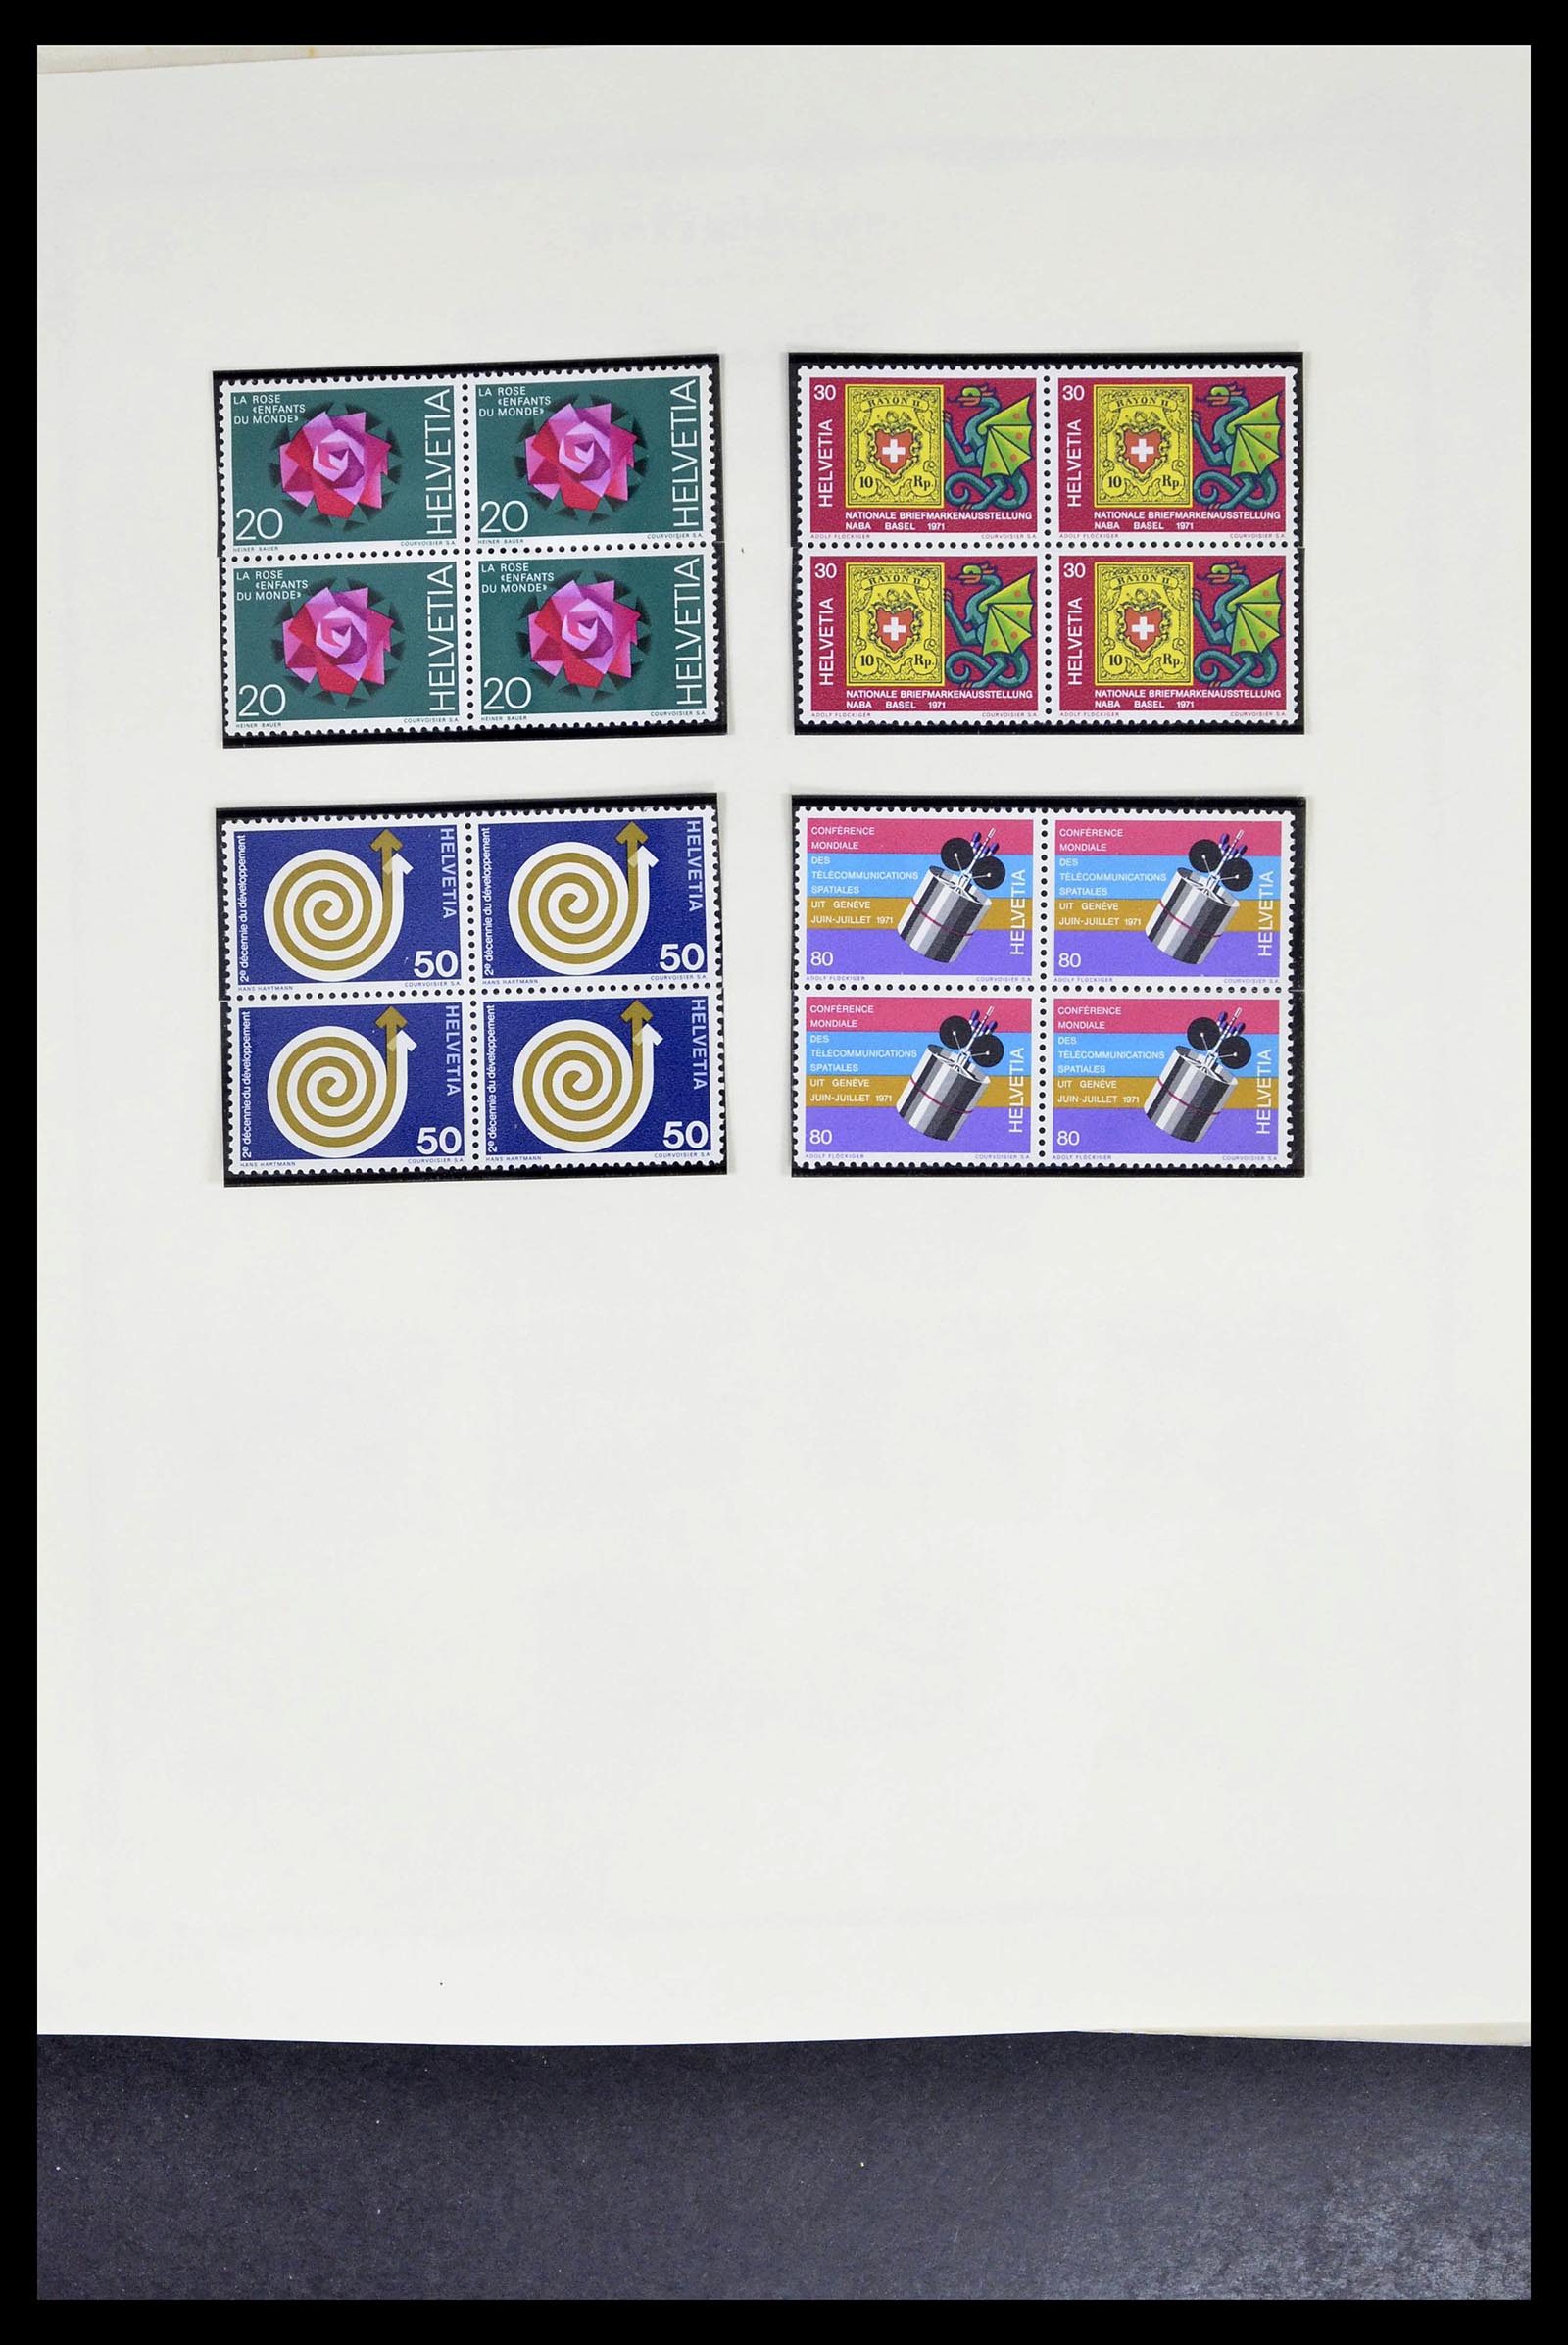 39178 0072 - Stamp collection 39178 Switzerland 1850-1989.